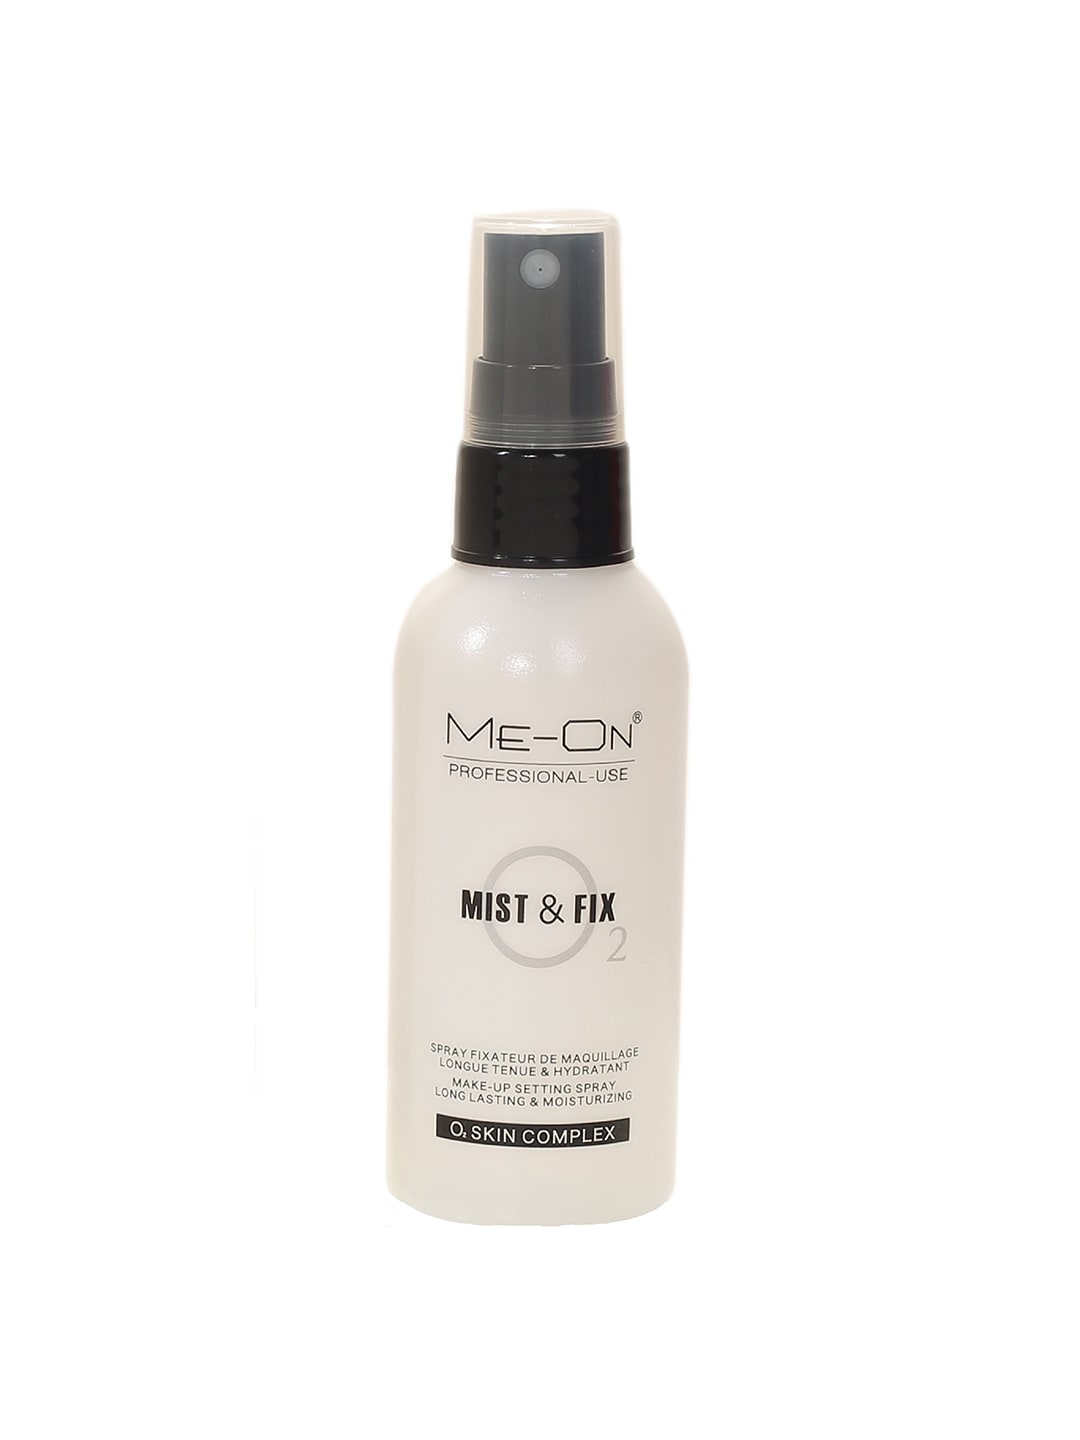 ME-ON Makeup Fixer Non Illuminating Spray -80 ml Price in India